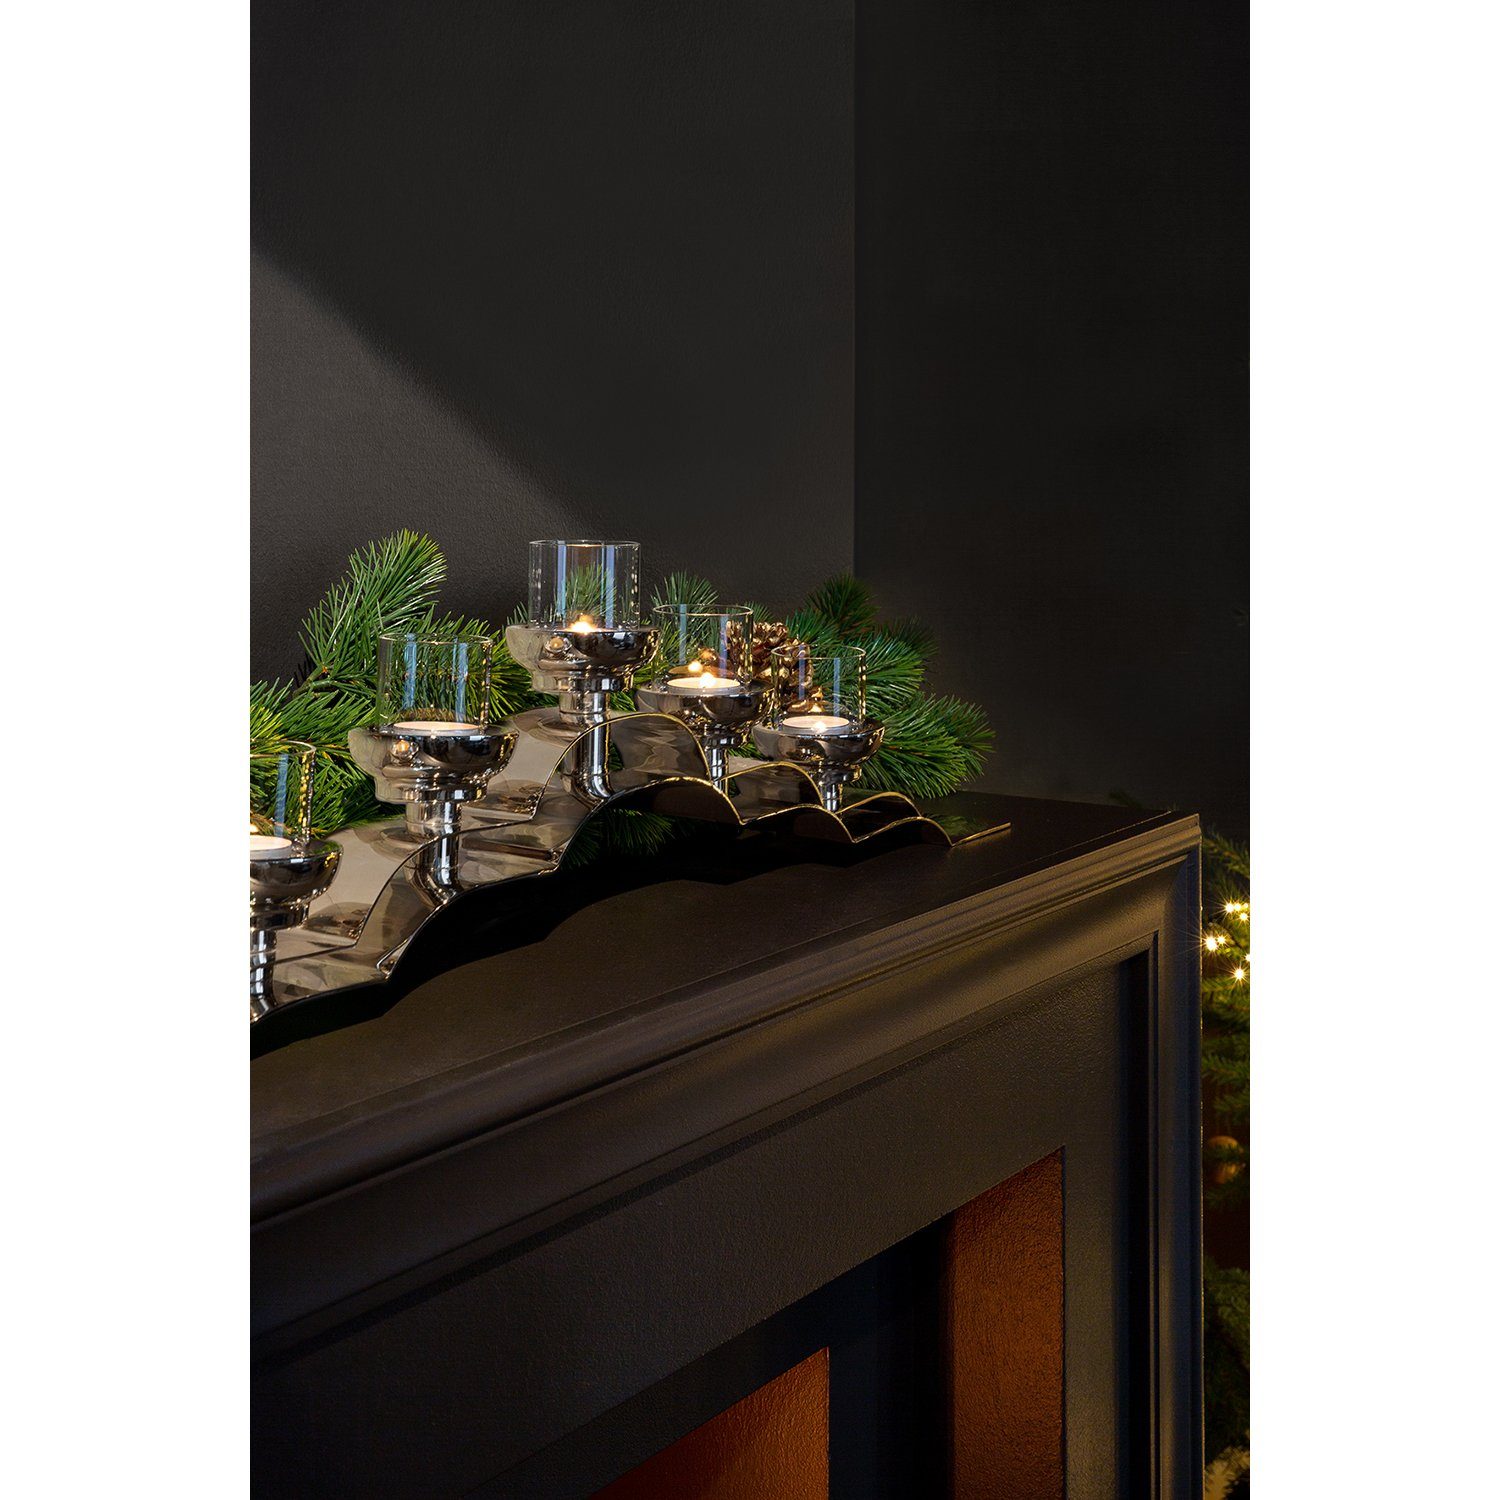 NUVOLA - vernickelt H.19,5cm B.80cm, - - Kerzenleuchter outdoorgeeignet Edelstahl/Glas Leuchter Handarbeit silberfarben nicht Fink - - x